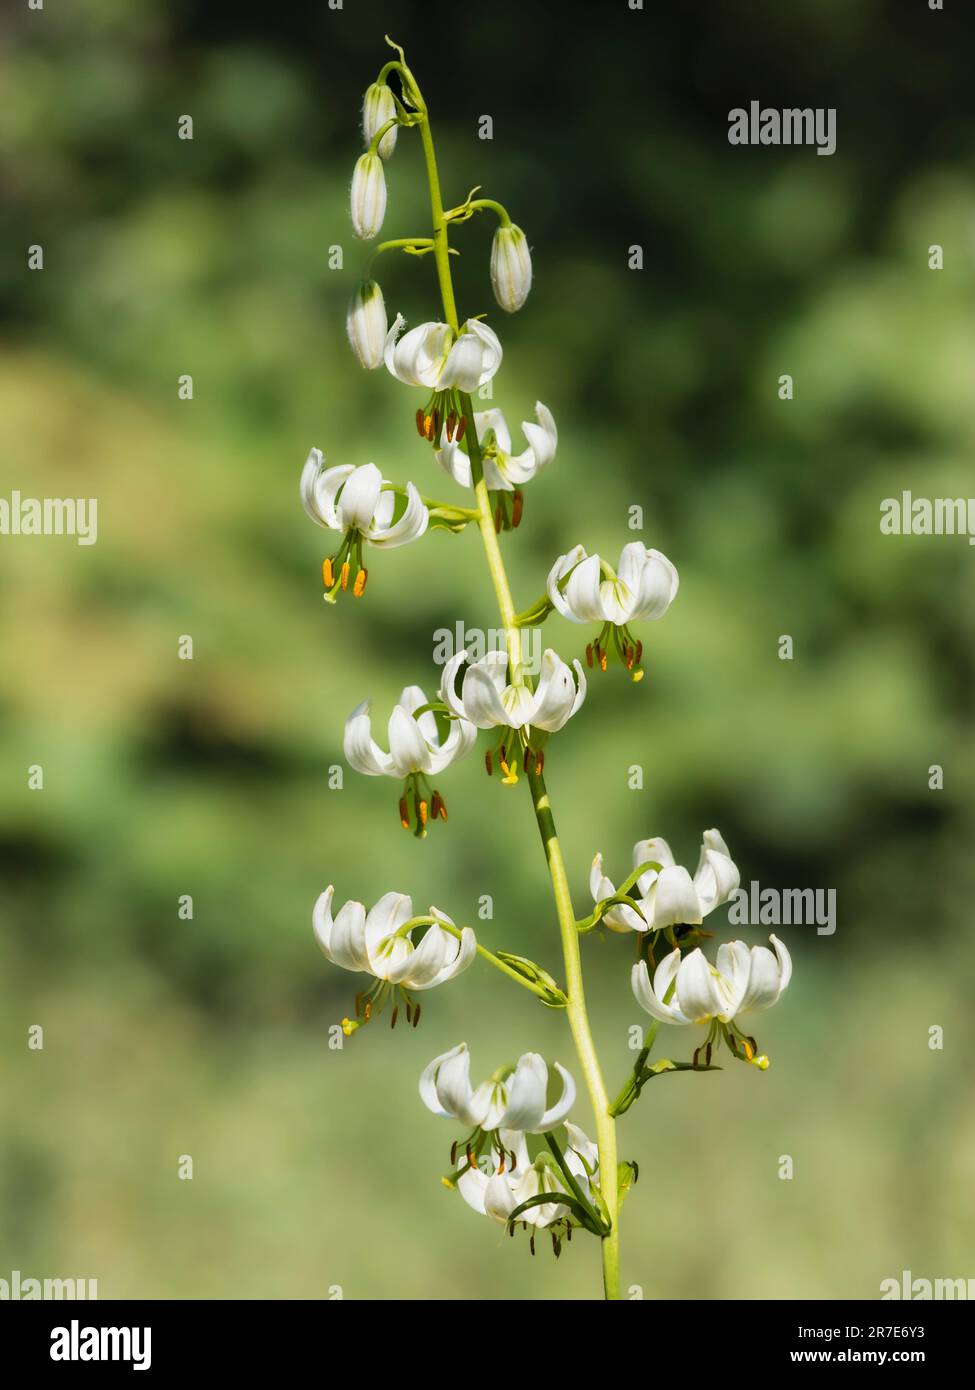 White turkscap flowers of the woodland lily bulb, Lilium martagon 'Album' Stock Photo